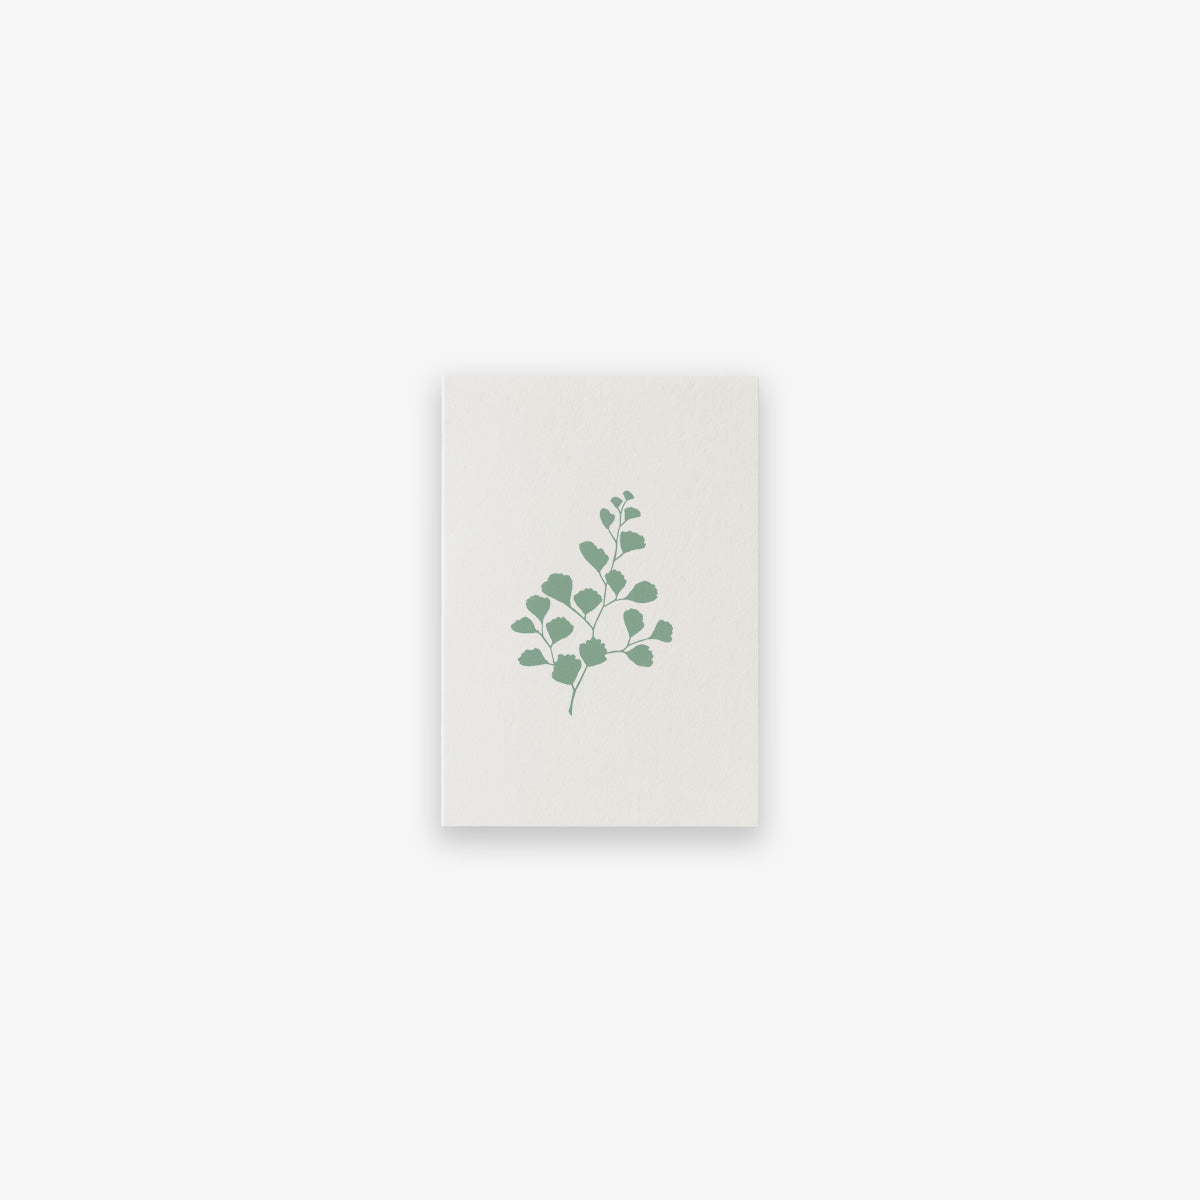 SMALL GREETING CARD // FERN II